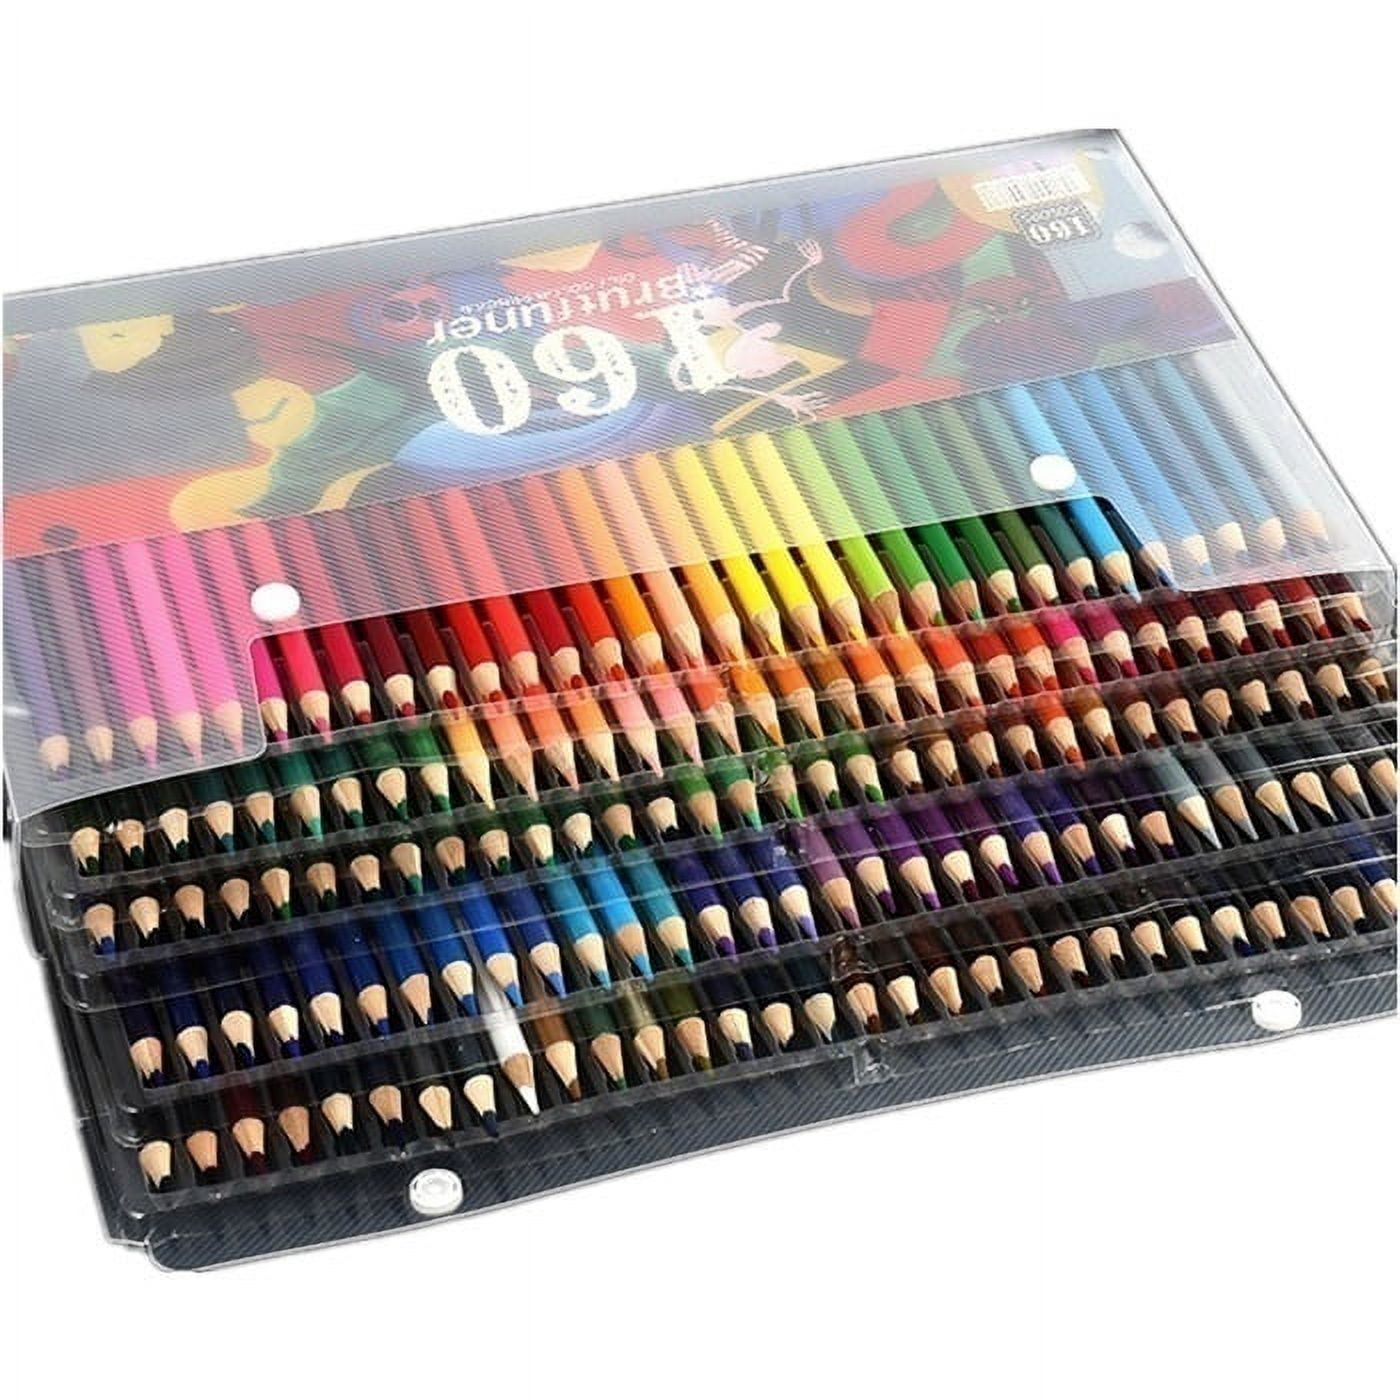 Hywell Colored Pencils 160 Color Pencils Set, The Best Color Pencils For  Artists, Comics